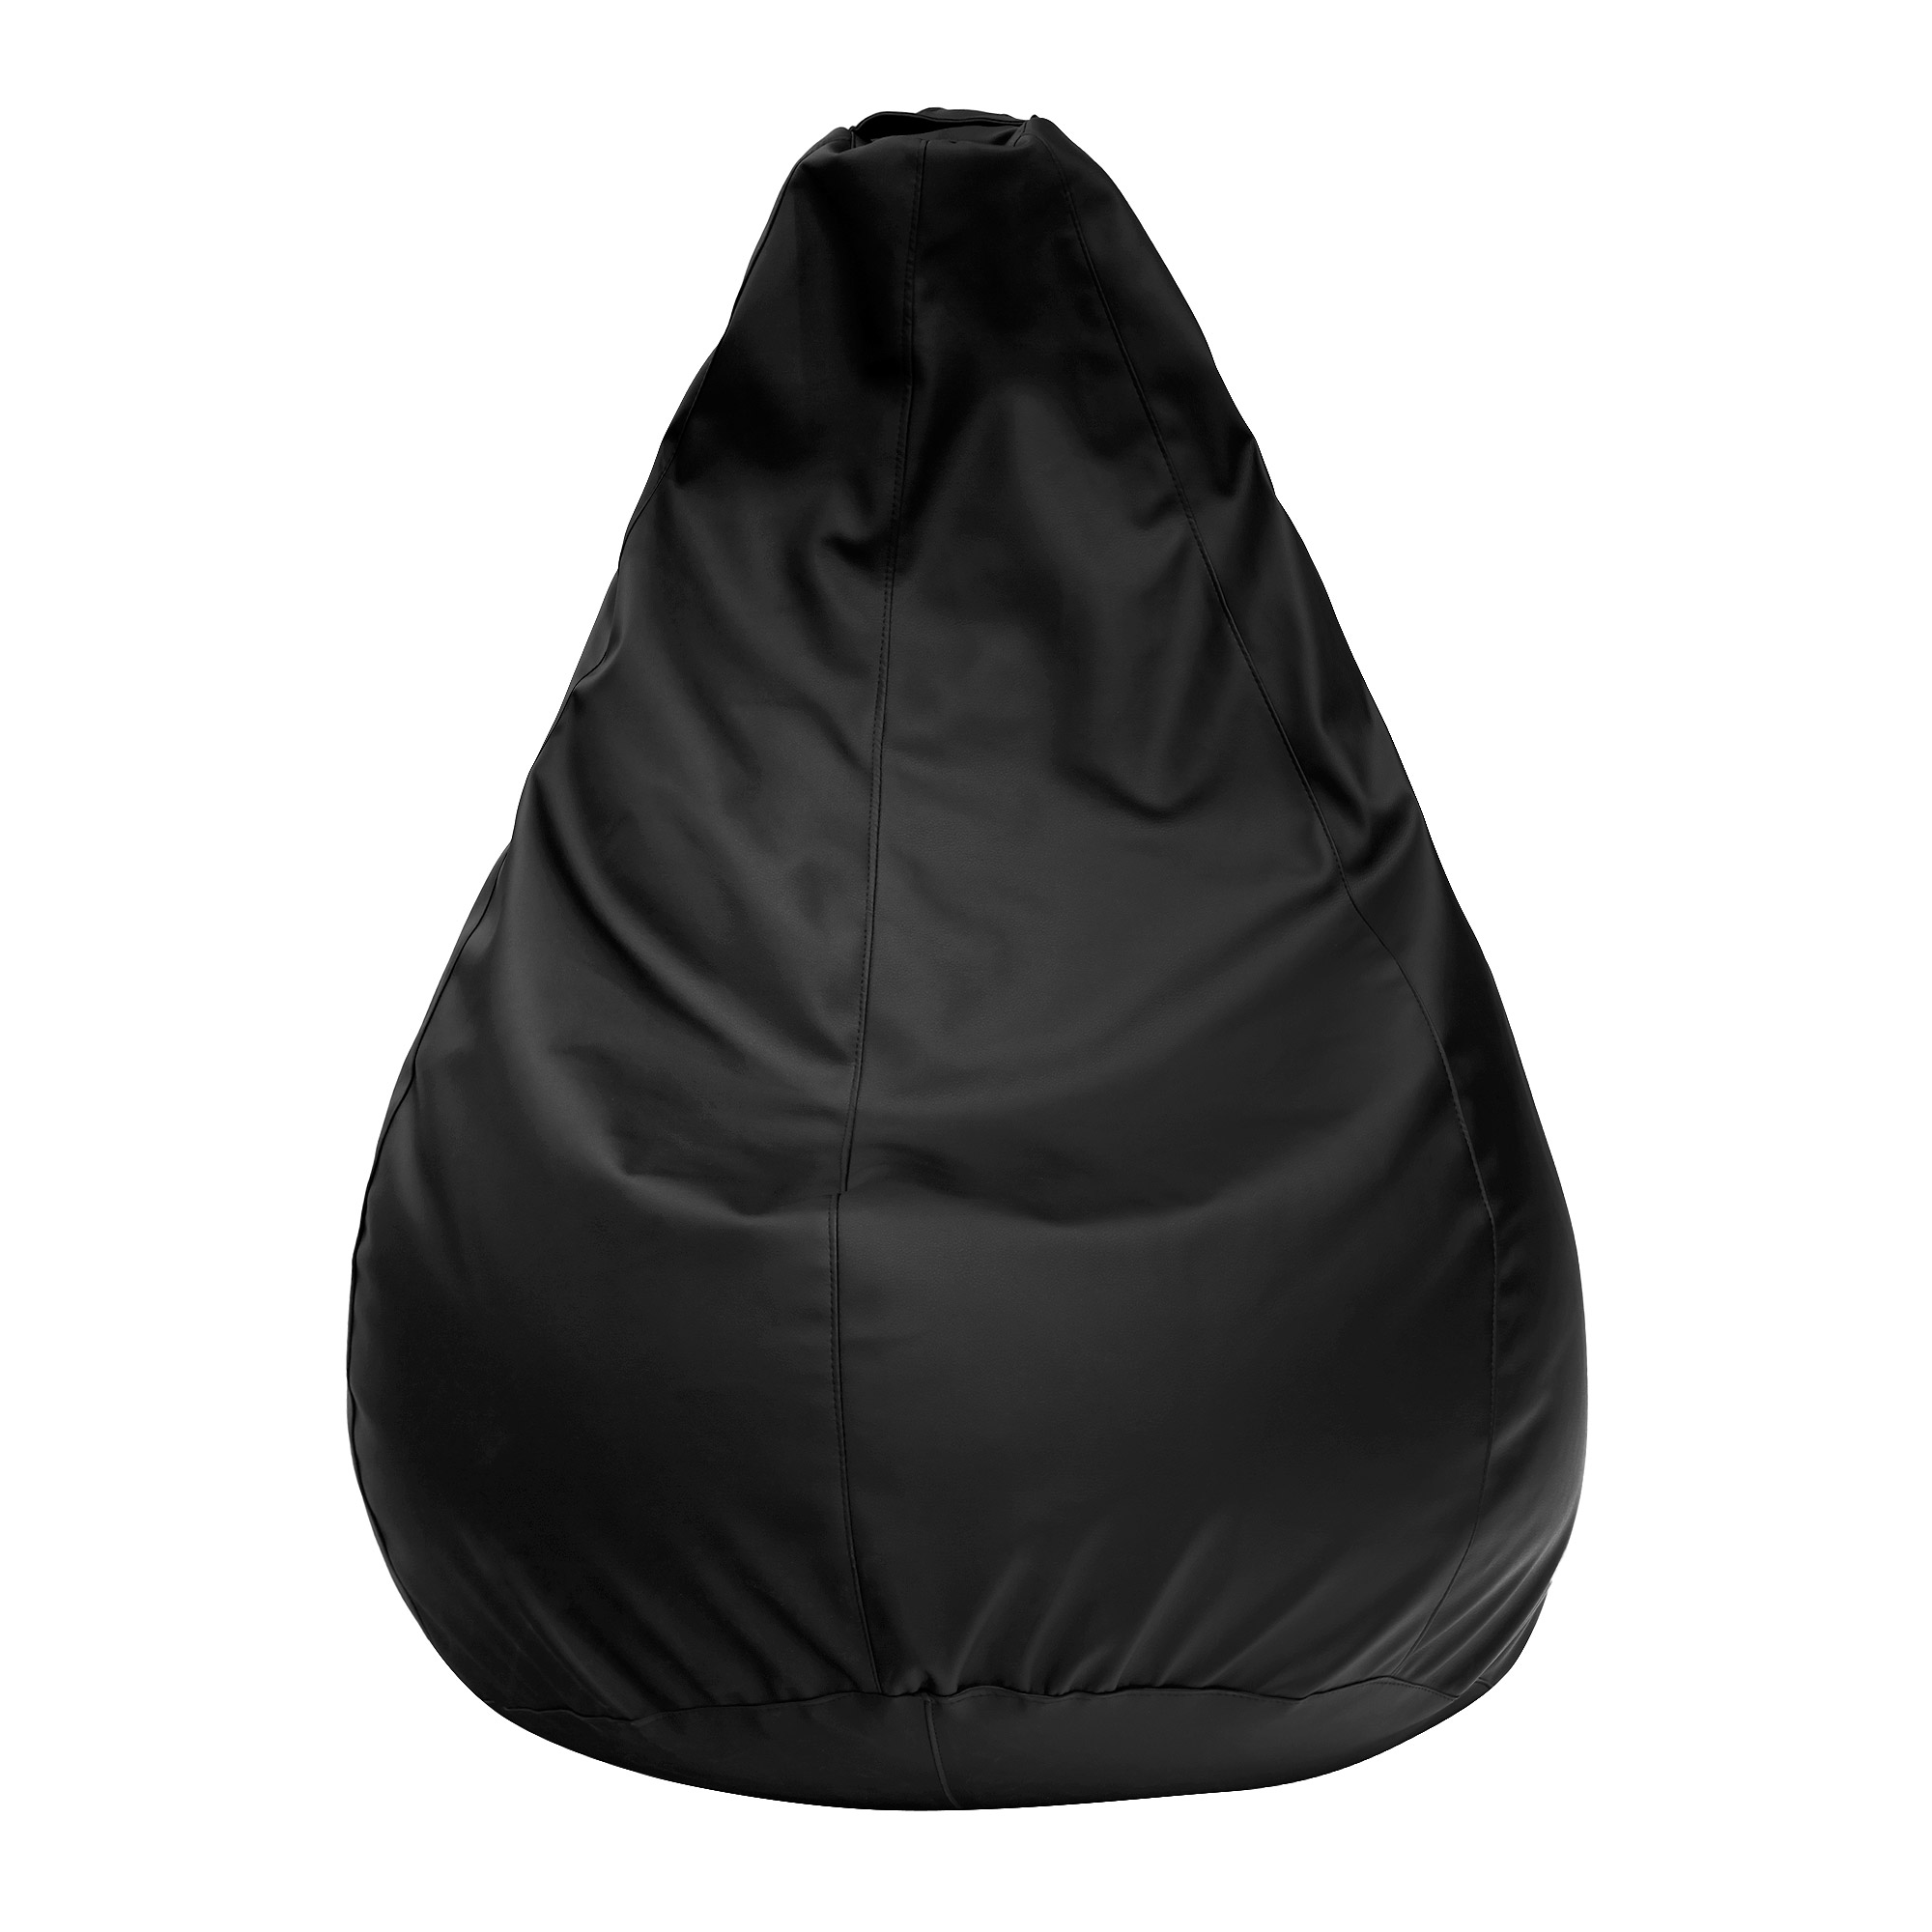 Кресло-мешок Dreambag черная экокожа xl 125х85, цвет черный, размер 85х85х125 см - фото 2